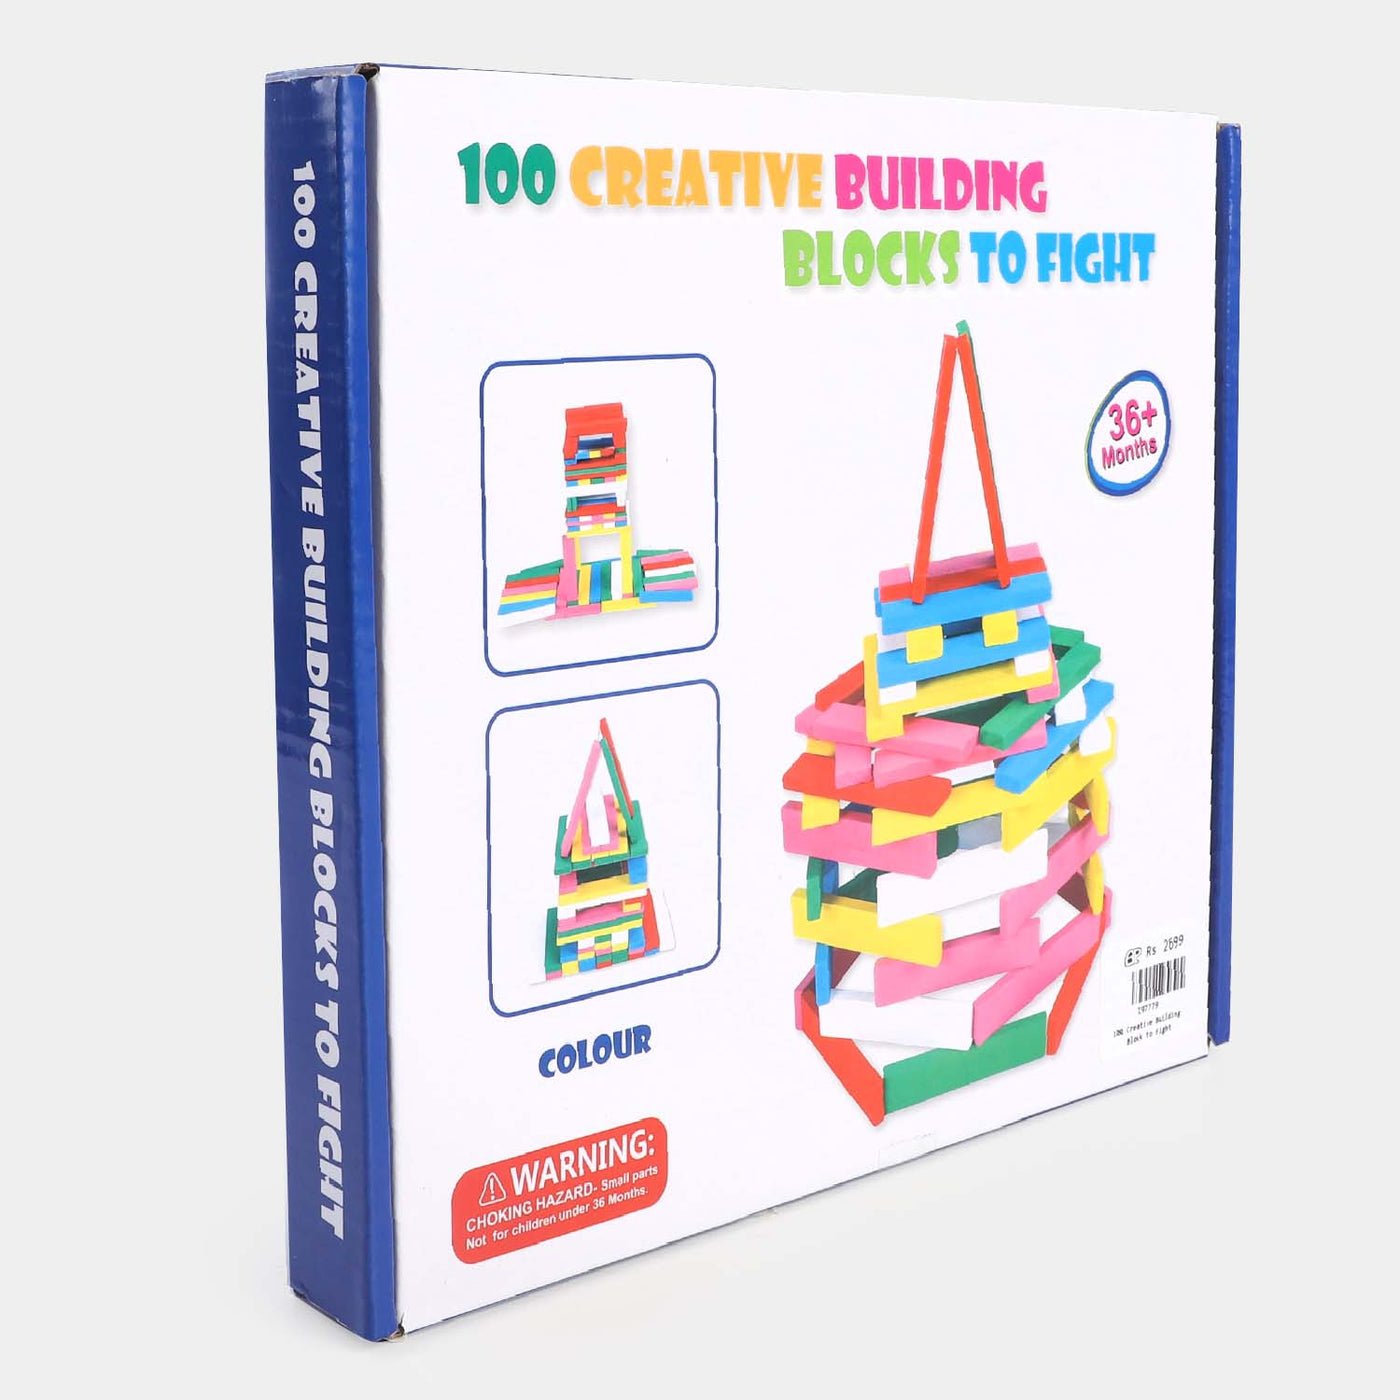 100 Creative Building Block Puzzle Set For Kids